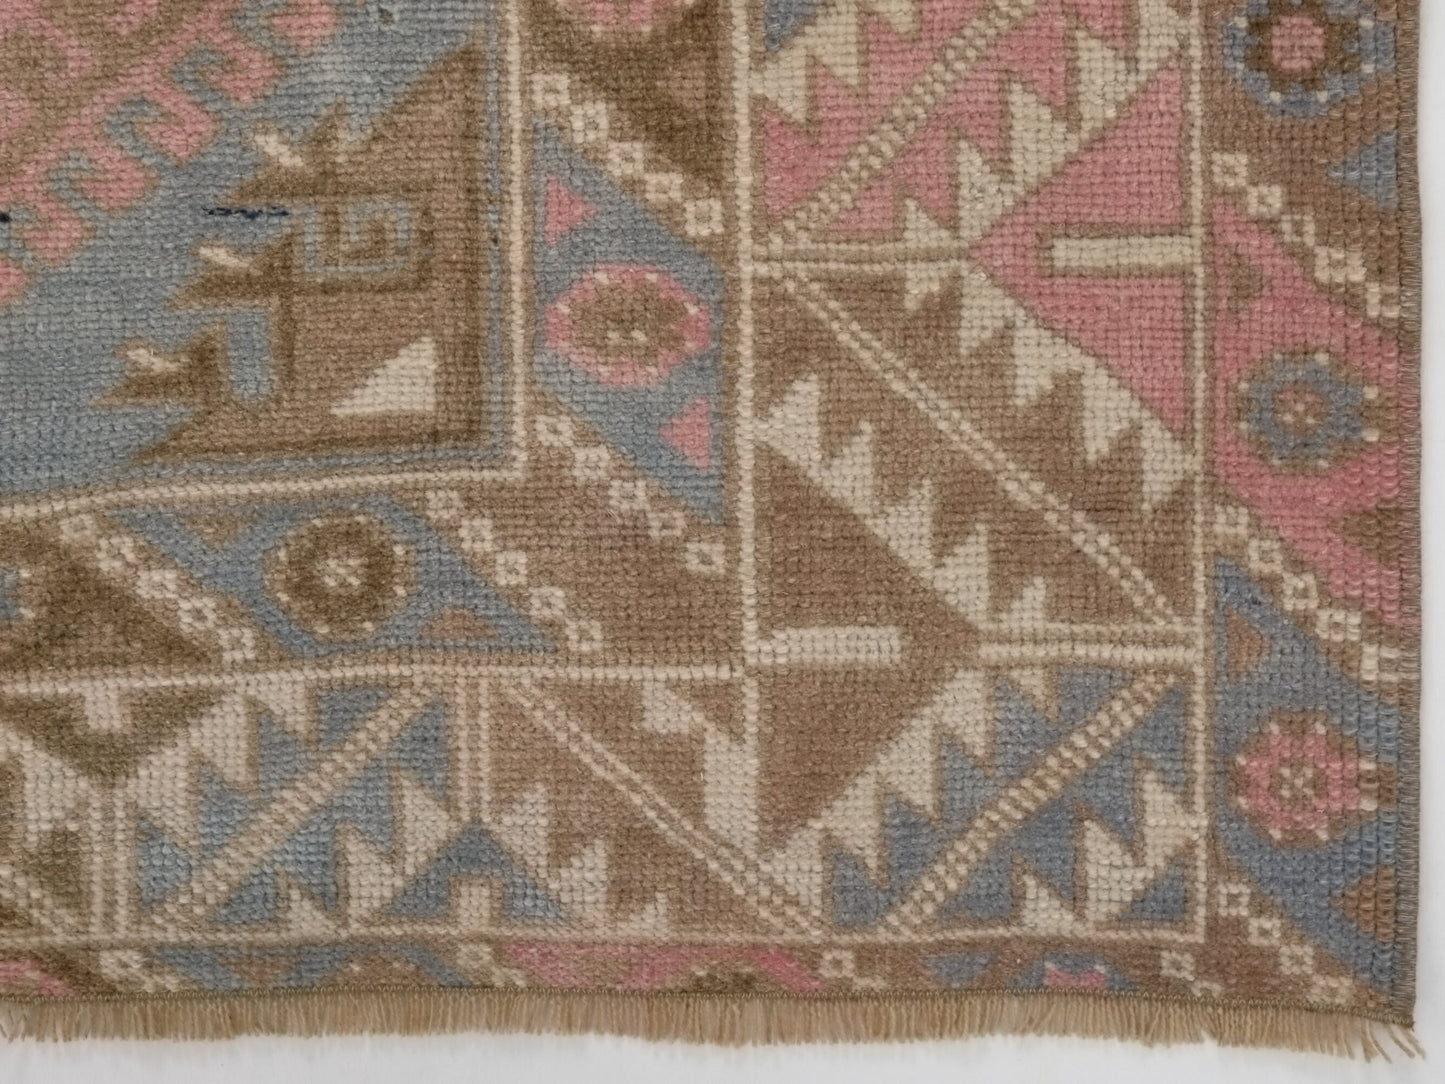 Faded Turkish rug, Anatolia Oushak rug, Vintage Area rug, Boho rug, Fine rug, 4x6 Rug, Tribal rug, Nursery rug, Ethnic rug, 10043